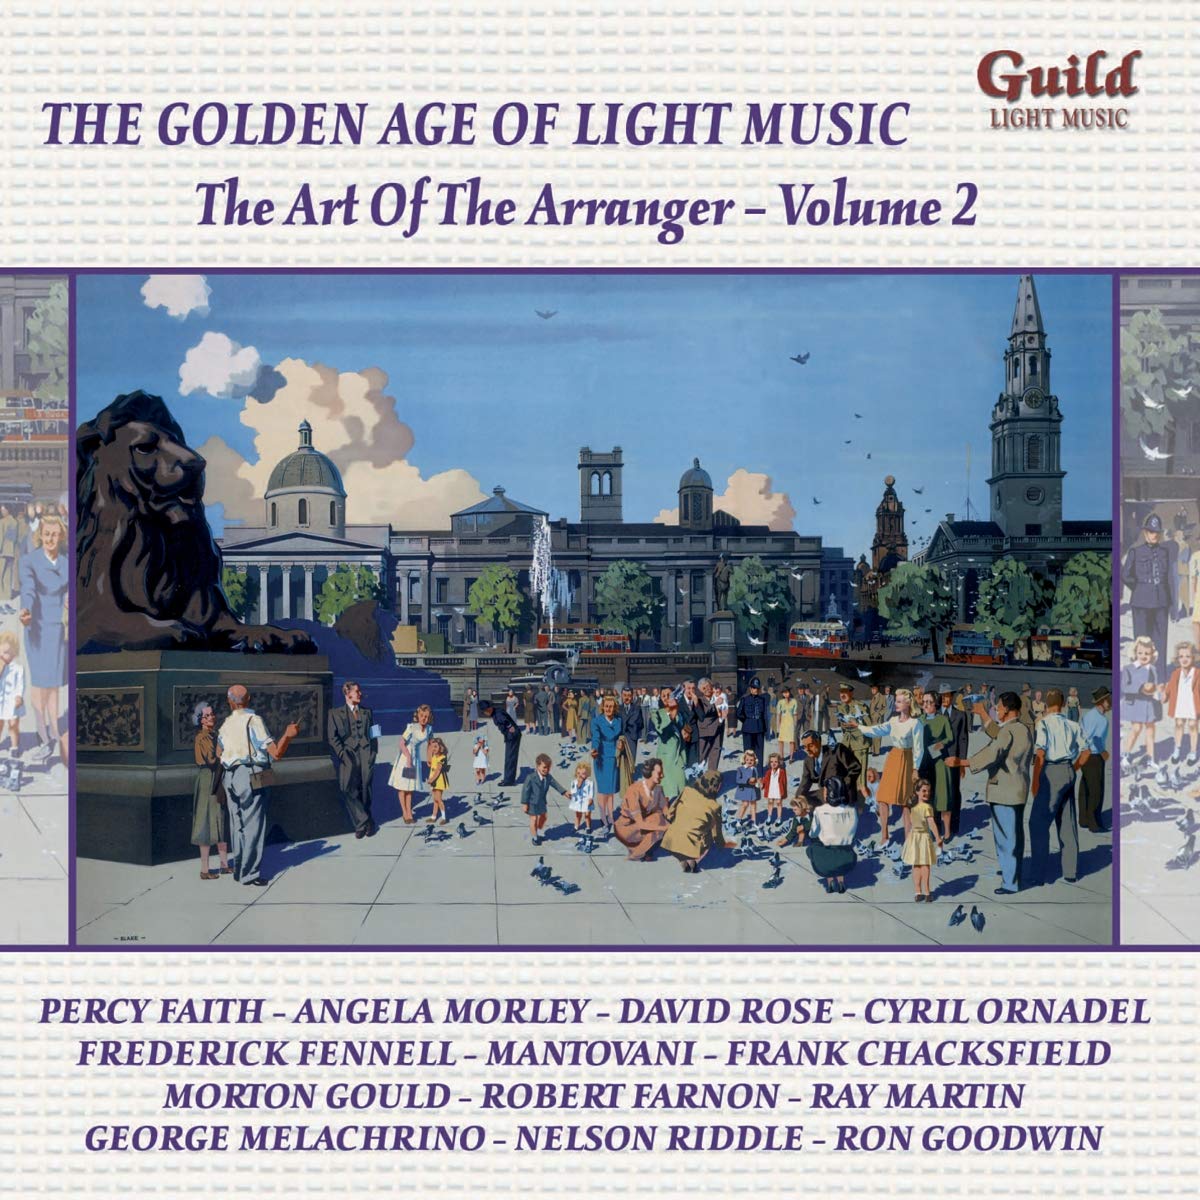 THE GOLDEN AGE OF LIGHT MUSIC: The Art Of The Arranger - Vol. 2